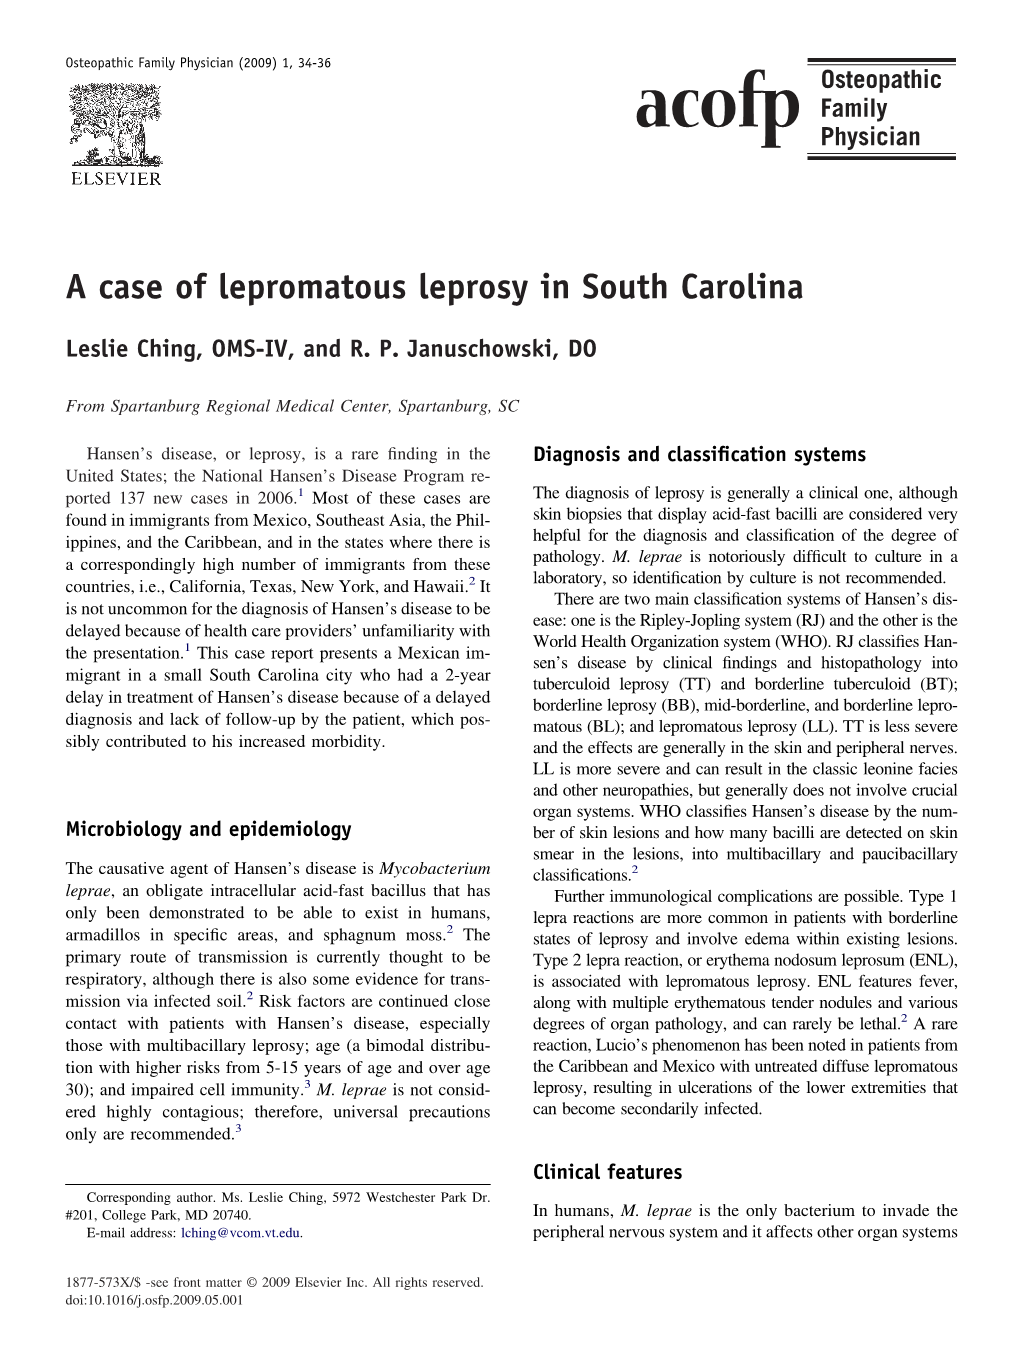 A Case of Lepromatous Leprosy in South Carolina